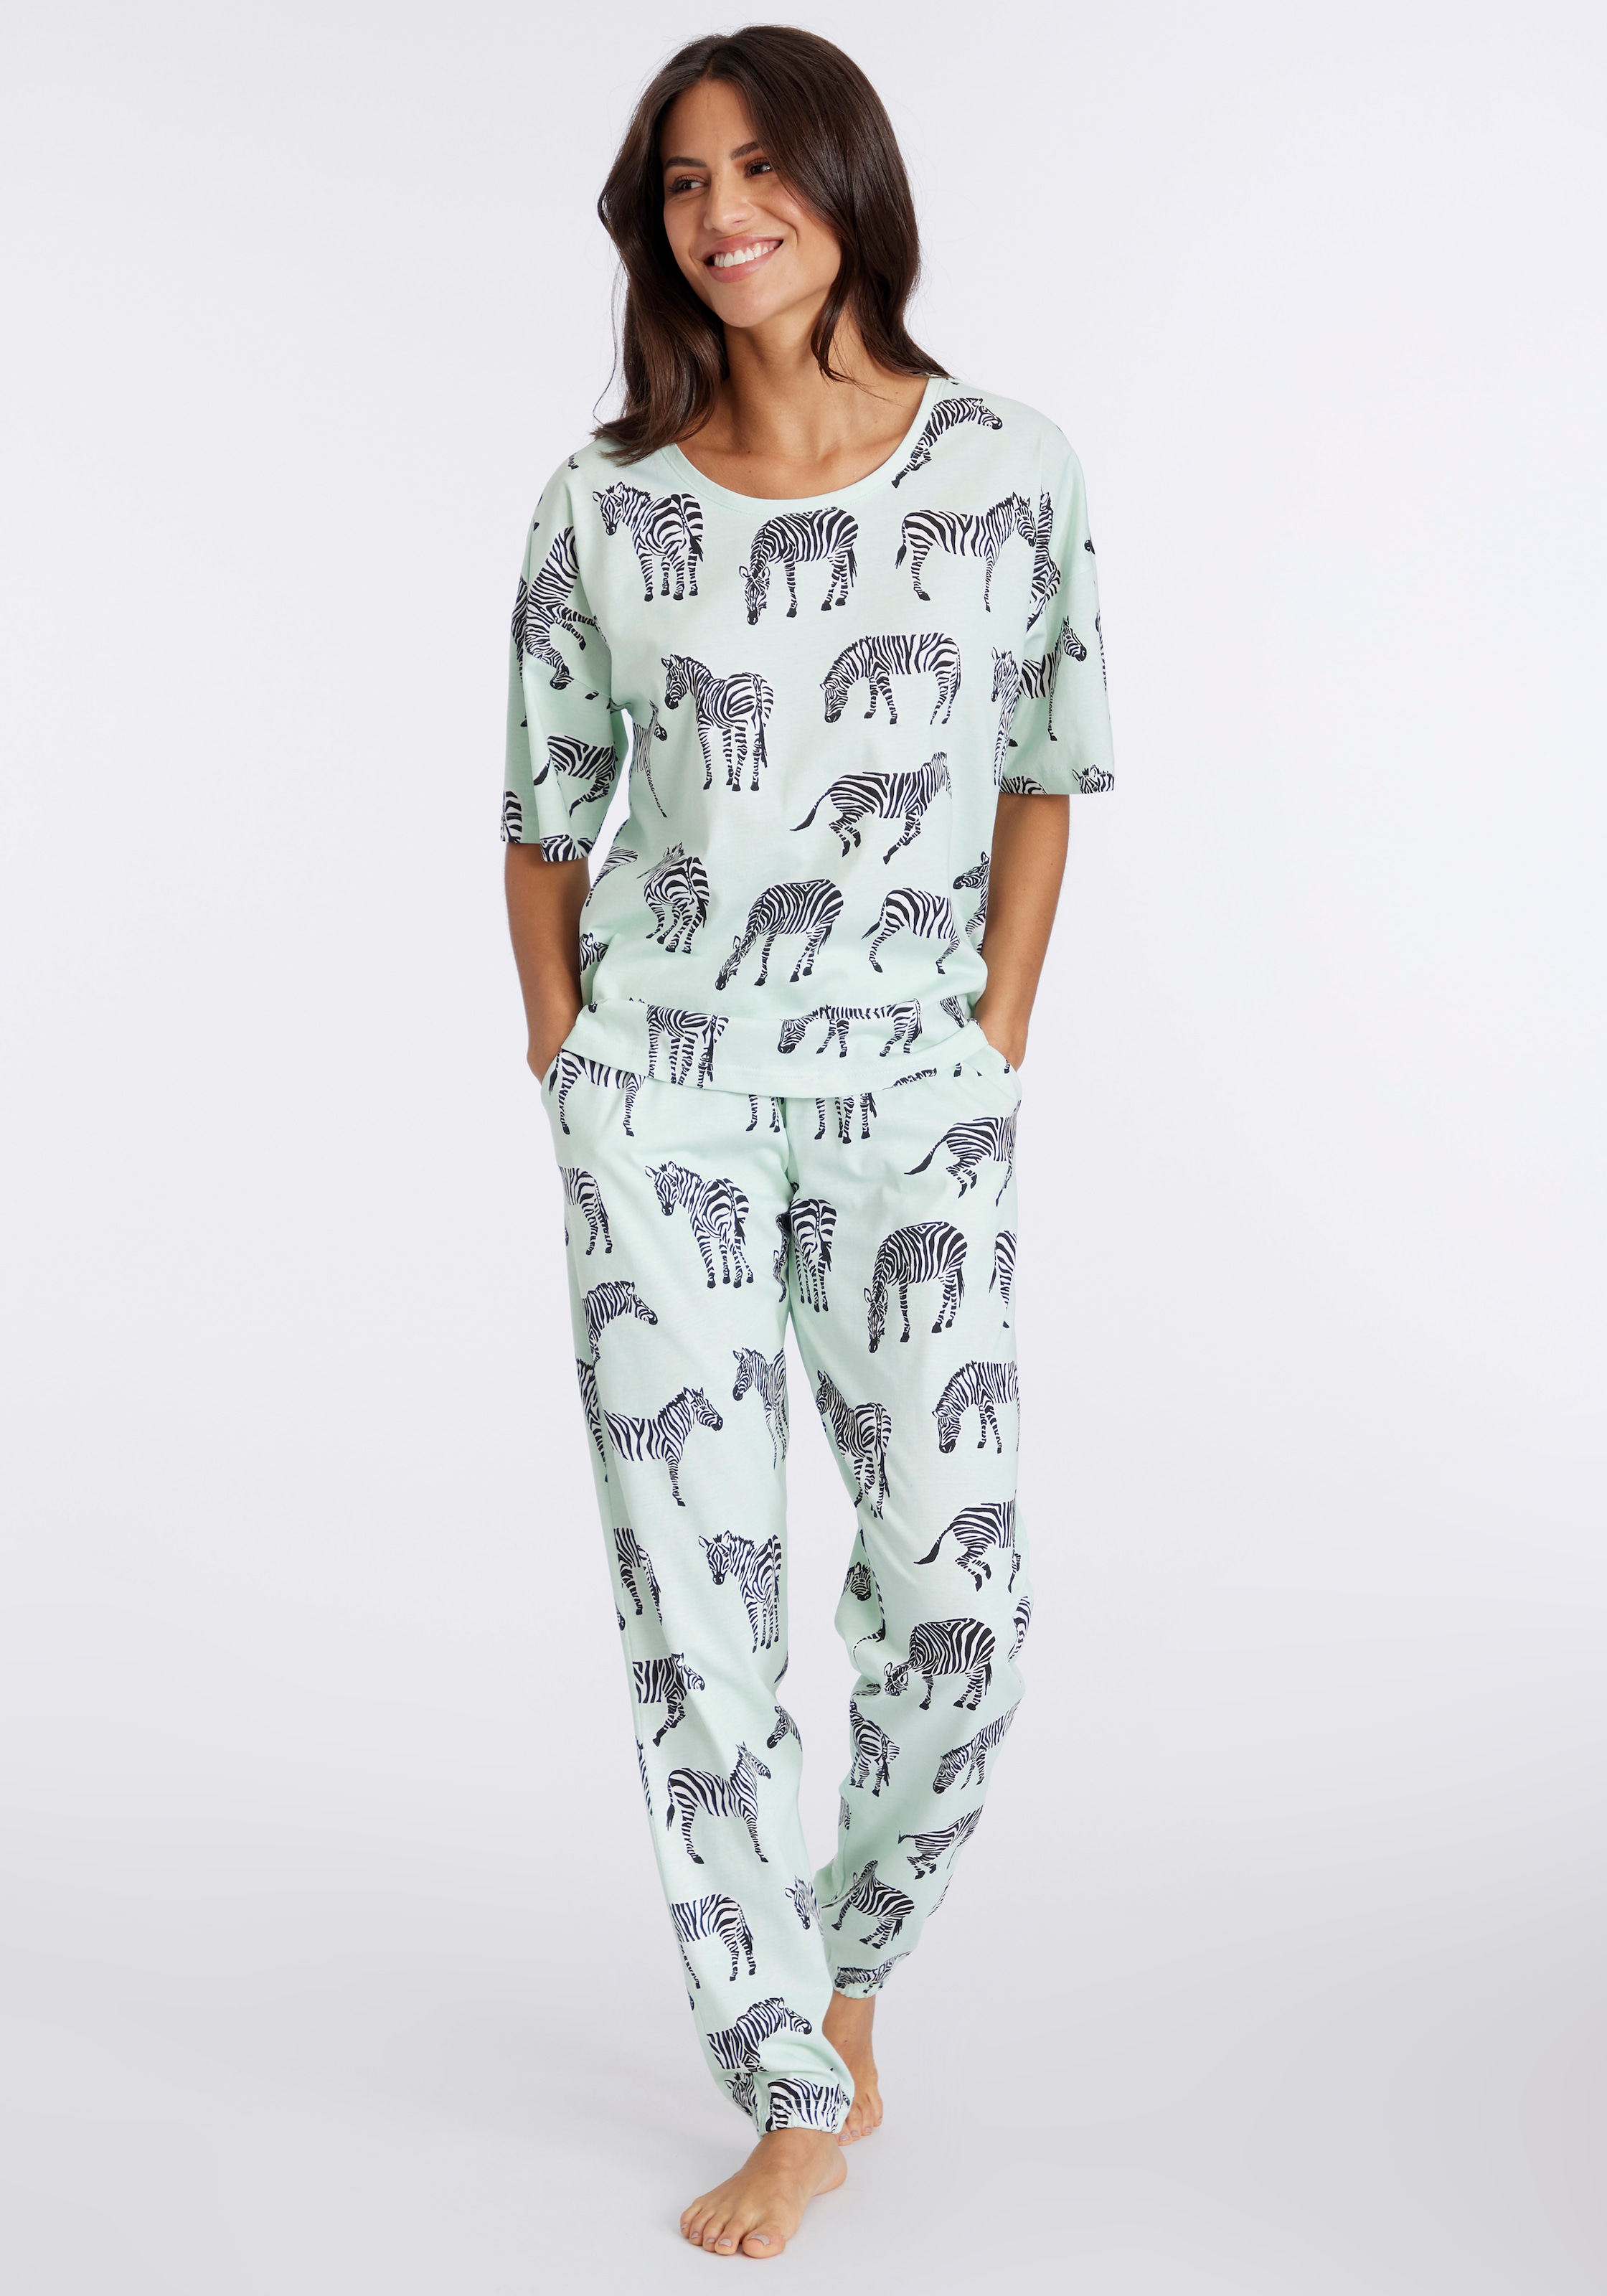 Vivance online Pyjama, kaufen Alloverprint Dreams mt (2 Animal tlg.),